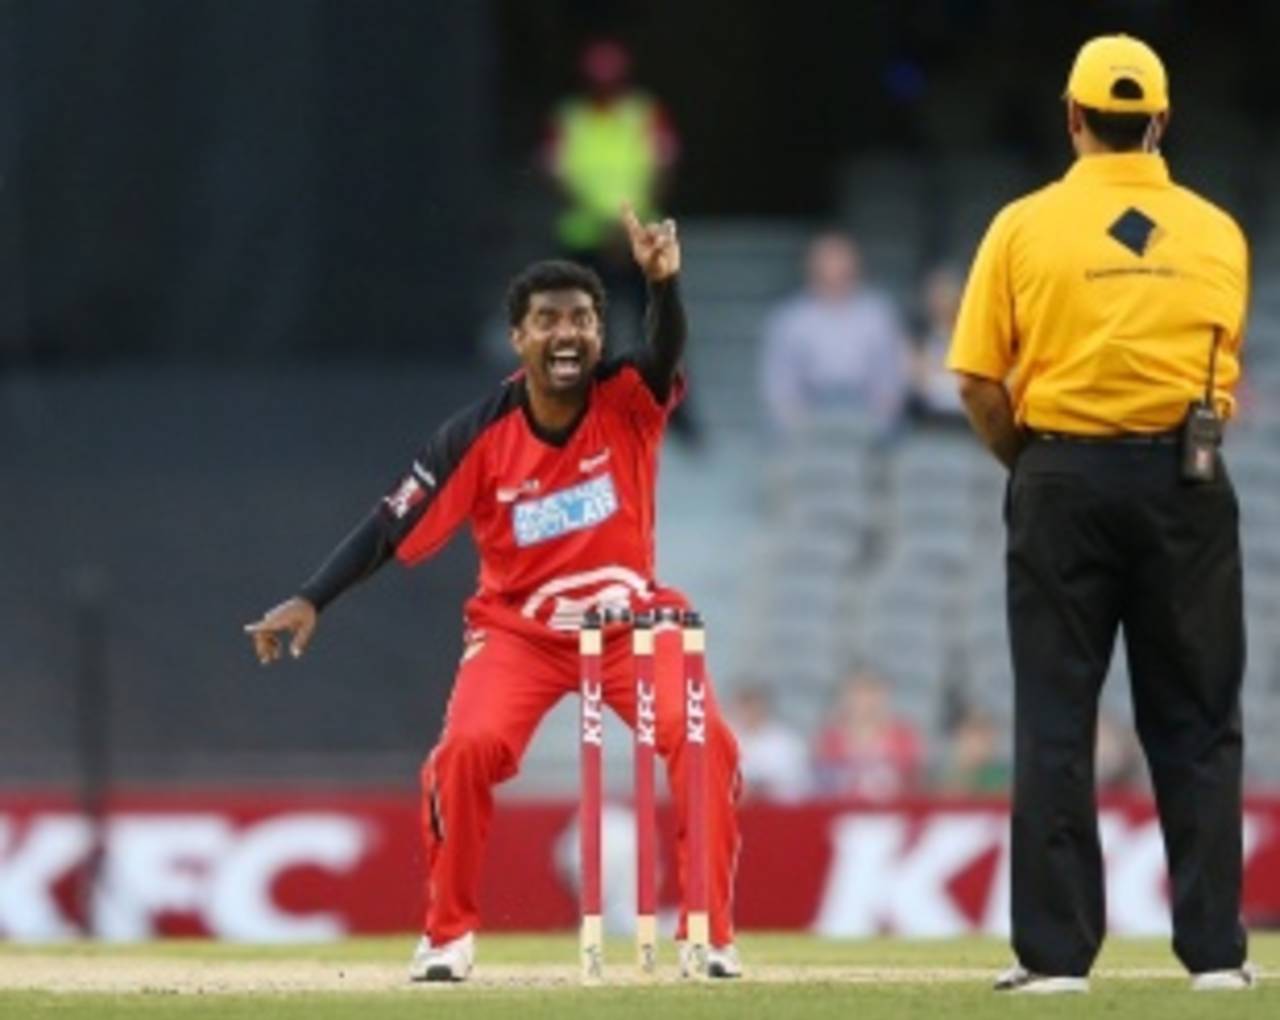 Muttiah Muralitharan continues to play Twenty20 cricket around the world&nbsp;&nbsp;&bull;&nbsp;&nbsp;Getty Images